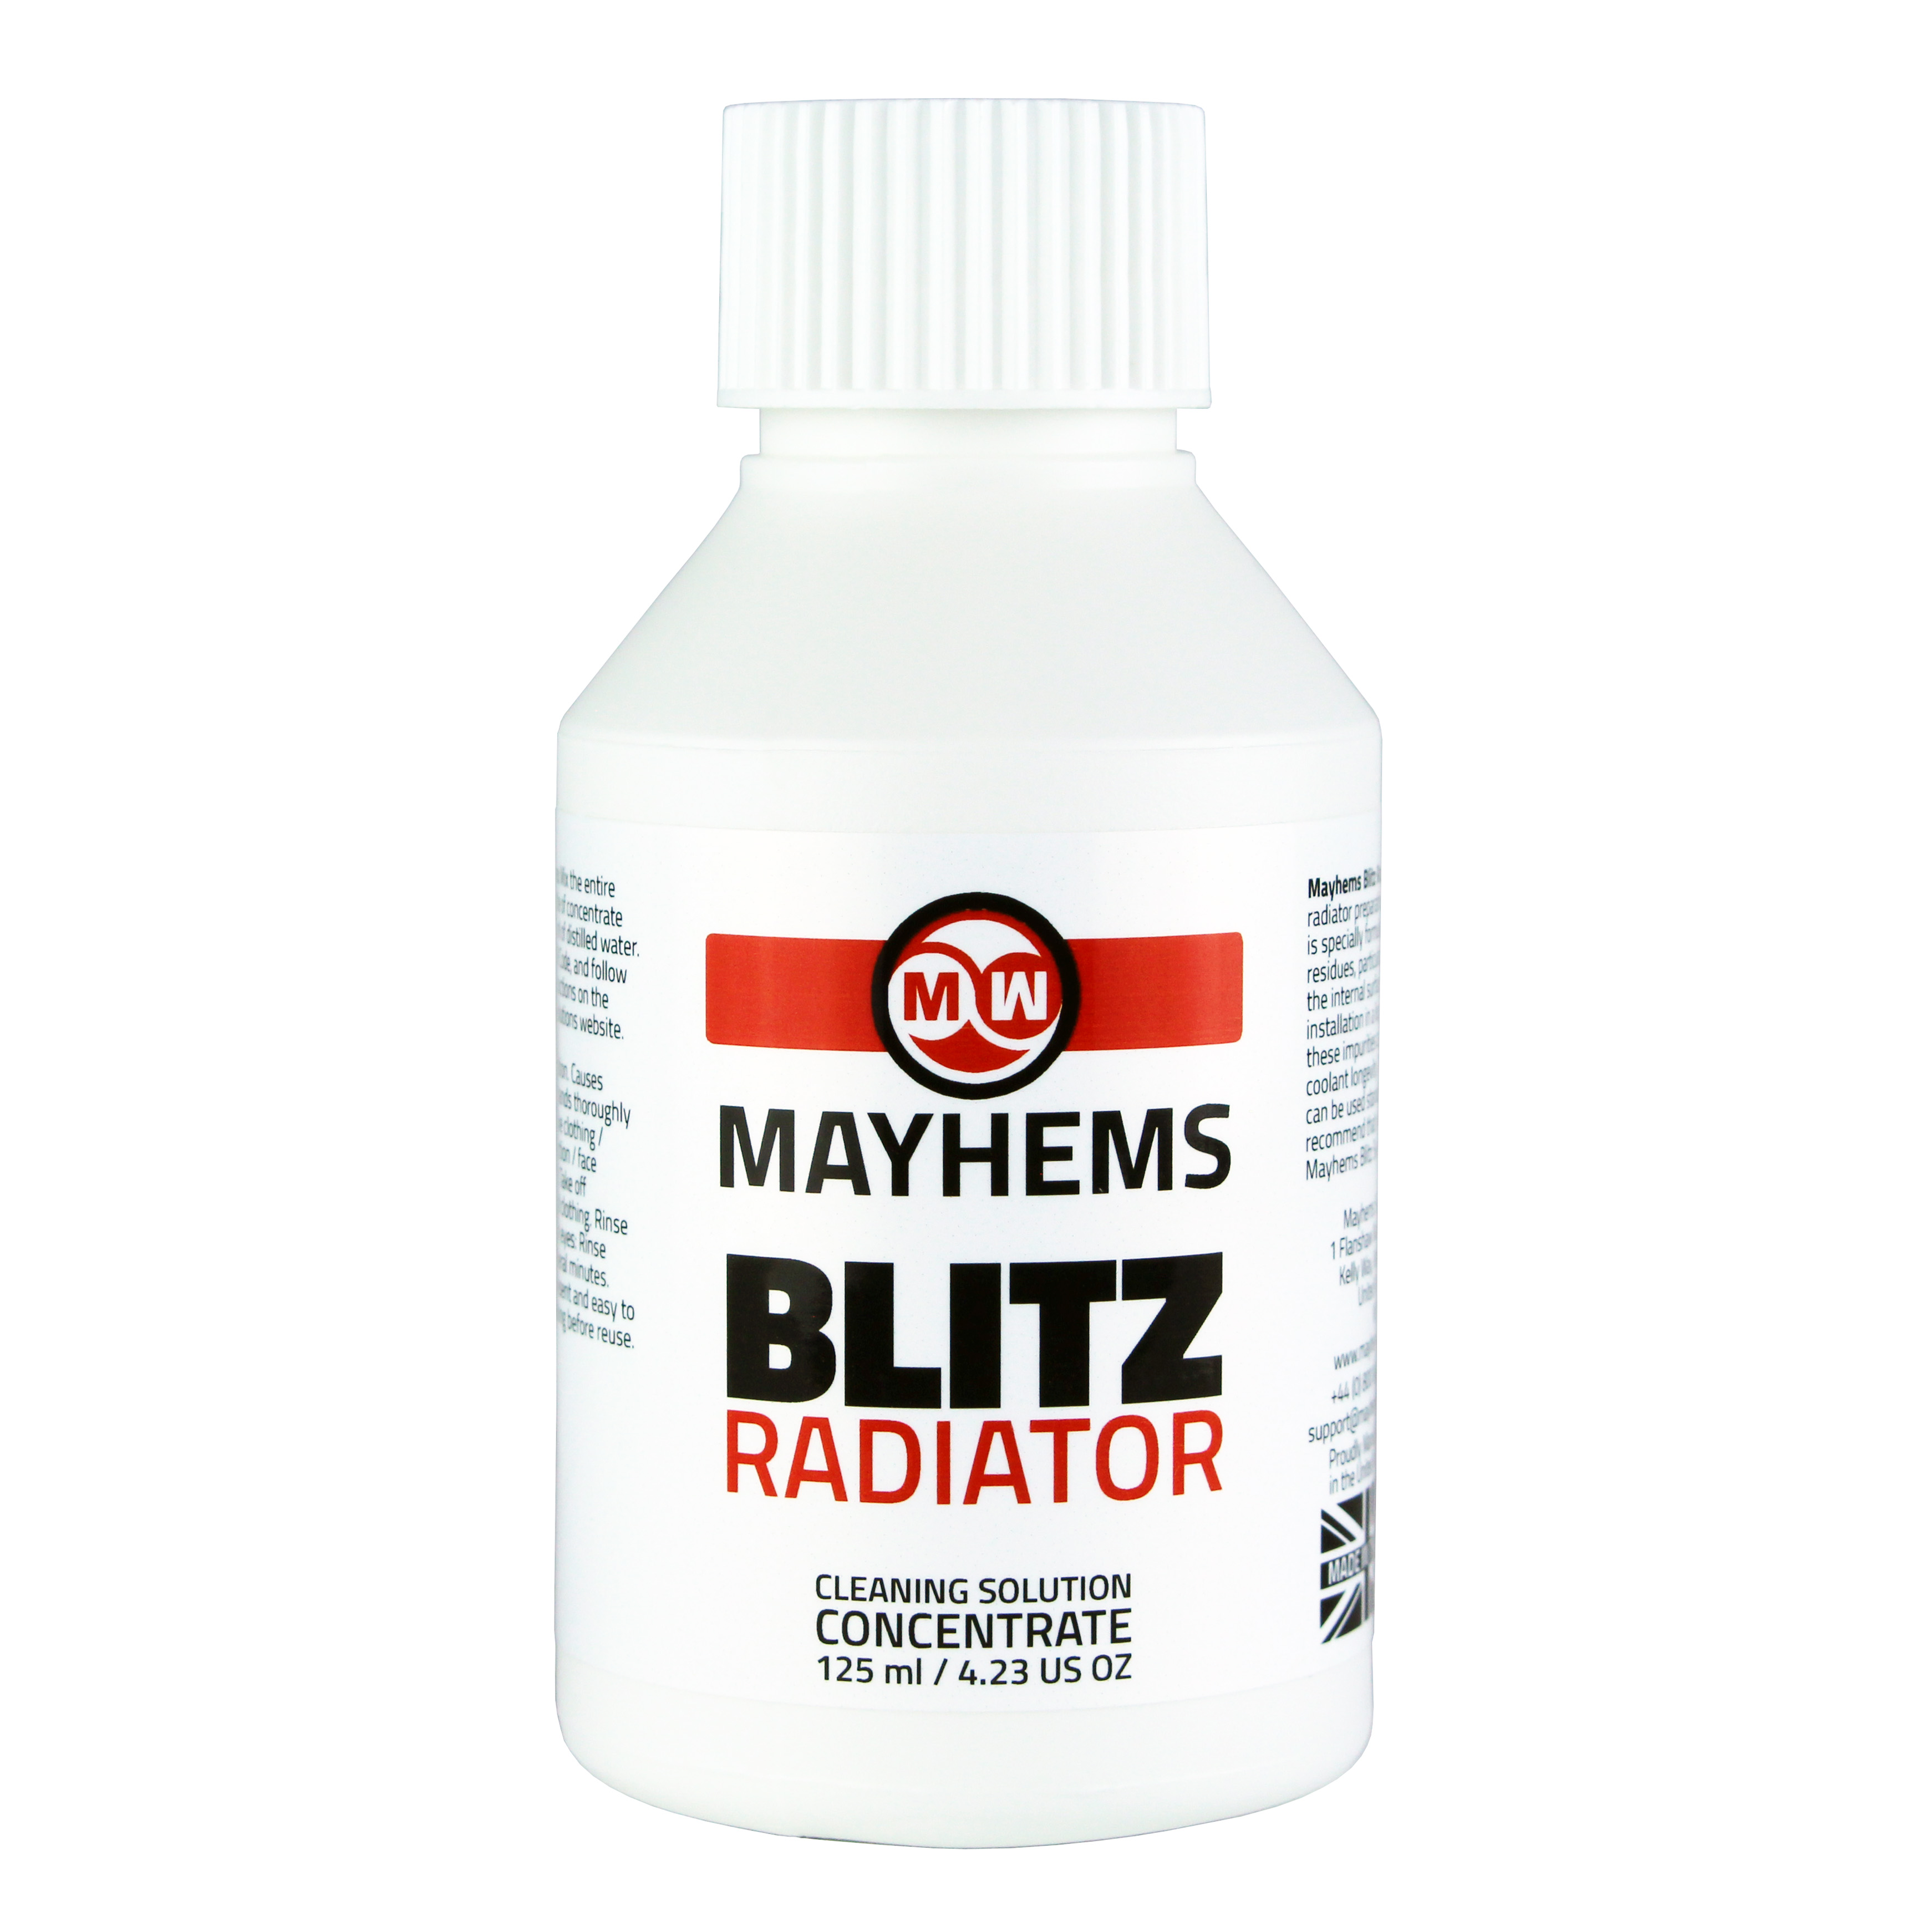 Mayhems - Mayhems - PC Cleaning Kit - Blitz Radiator - Radiator Cleaning, For Initial Setup and Coolant Change